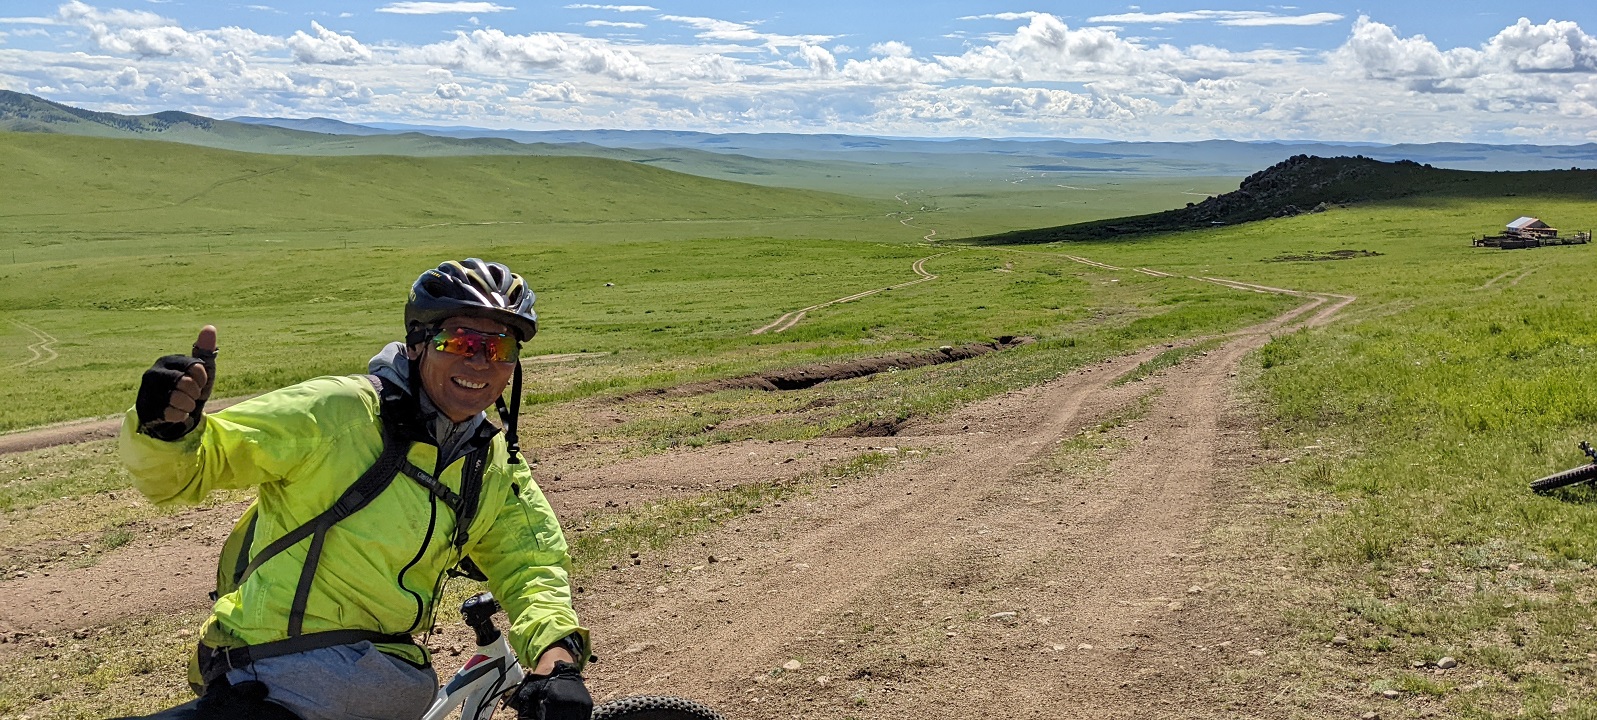 Cycling Holidays Mongolia